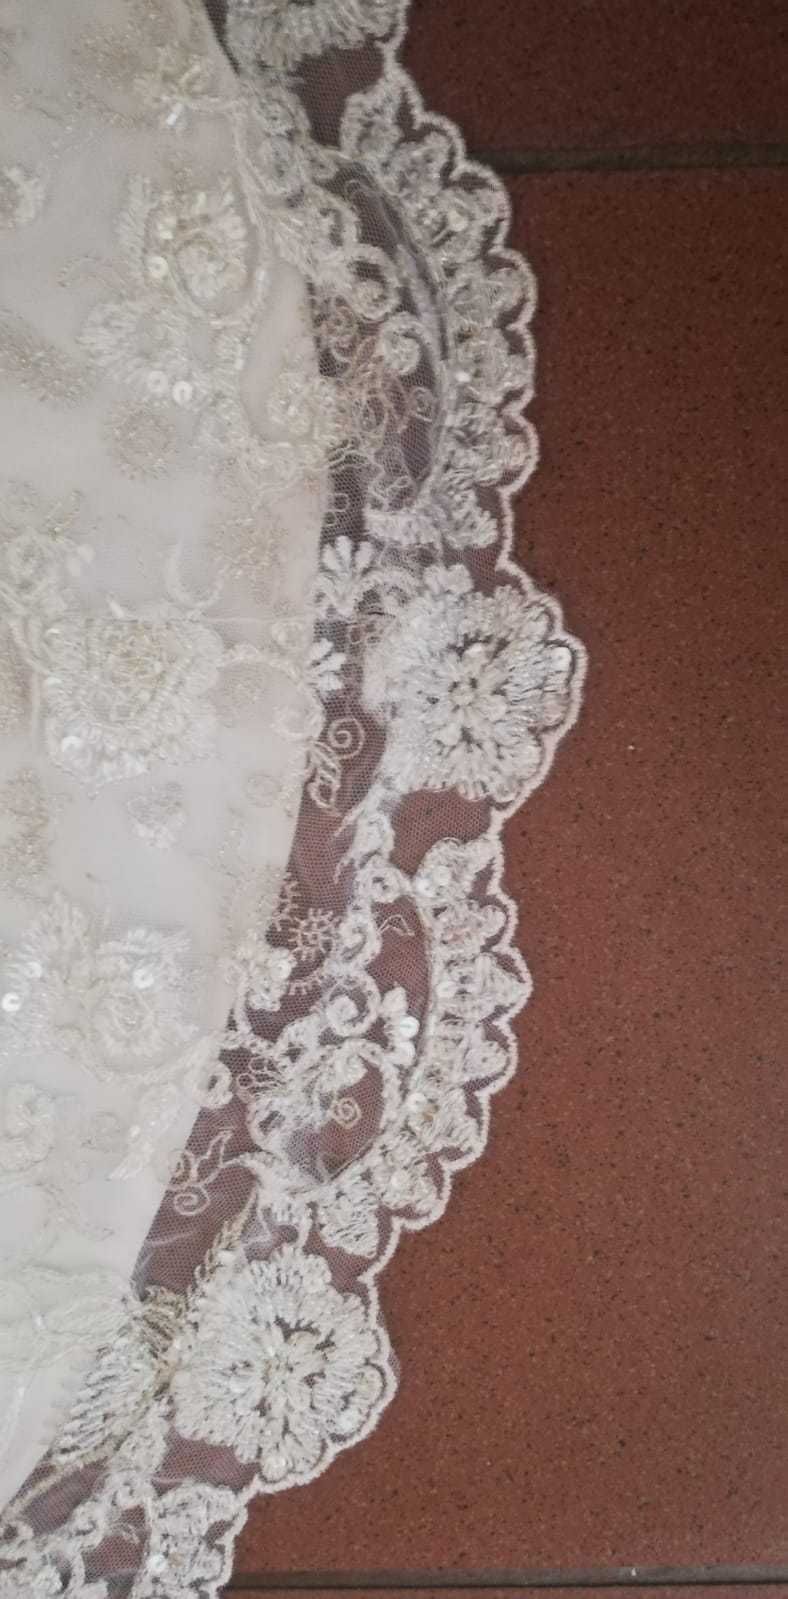 Suknia sukienka Ślubna koronka roz. 36-38 syrenka